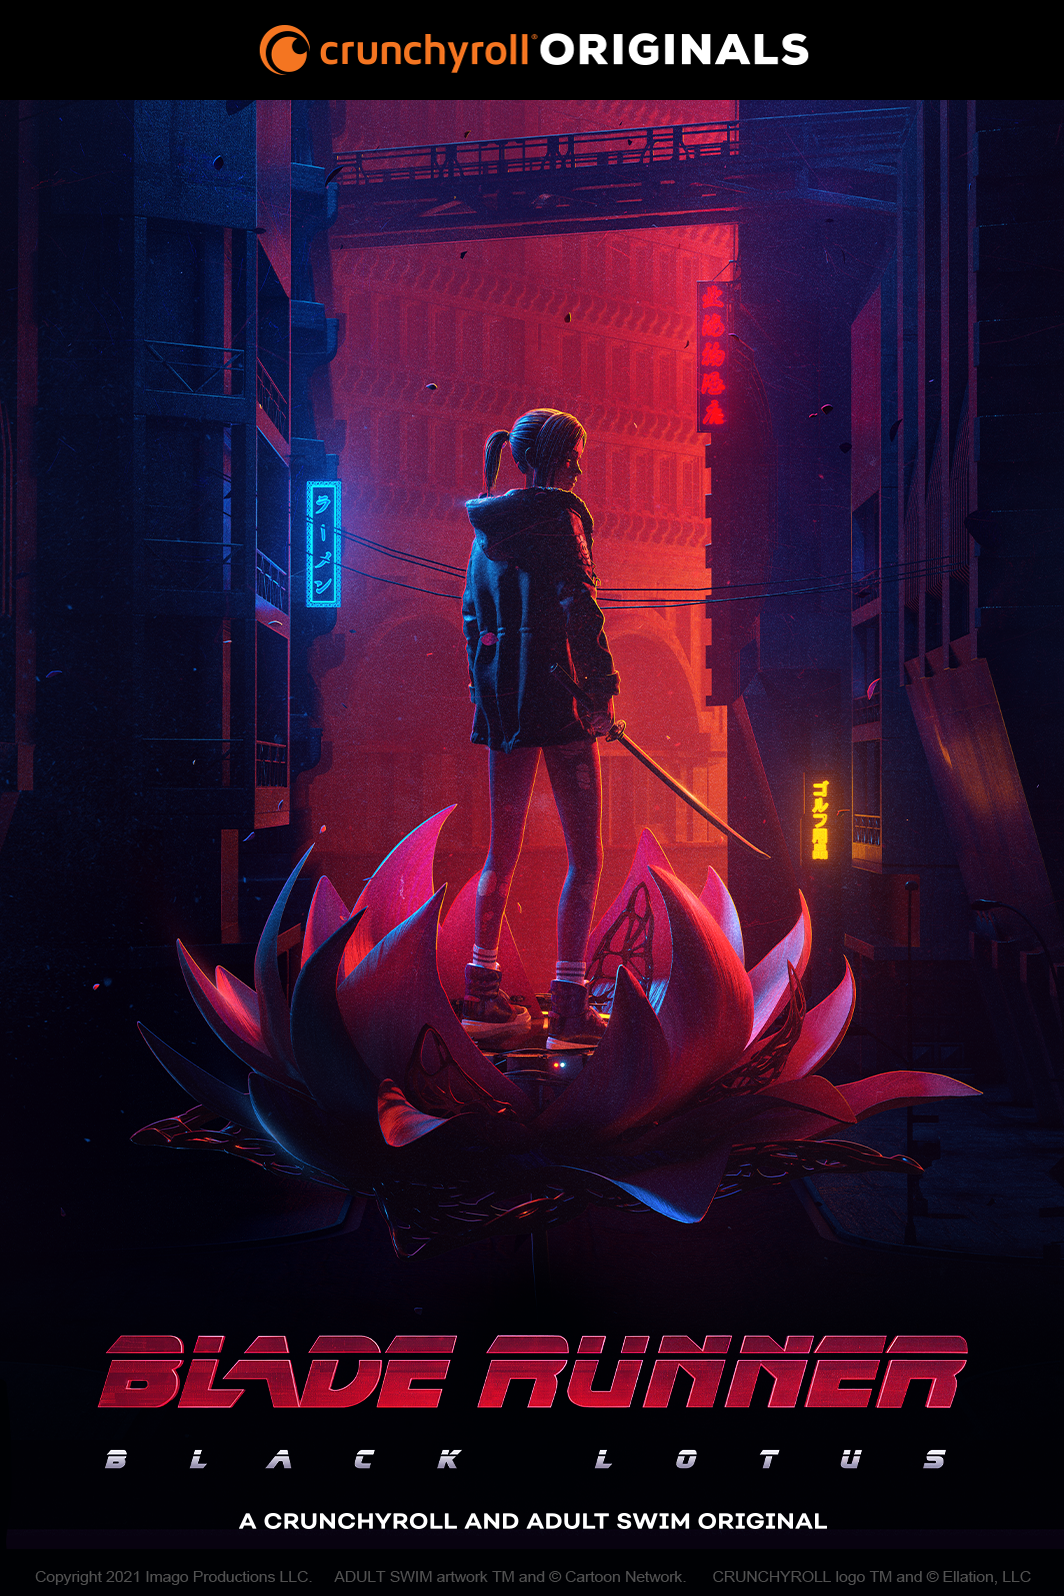 Blade Runner: Black Lotus Anime Trailer Was Just Revealed at SDCC 2021